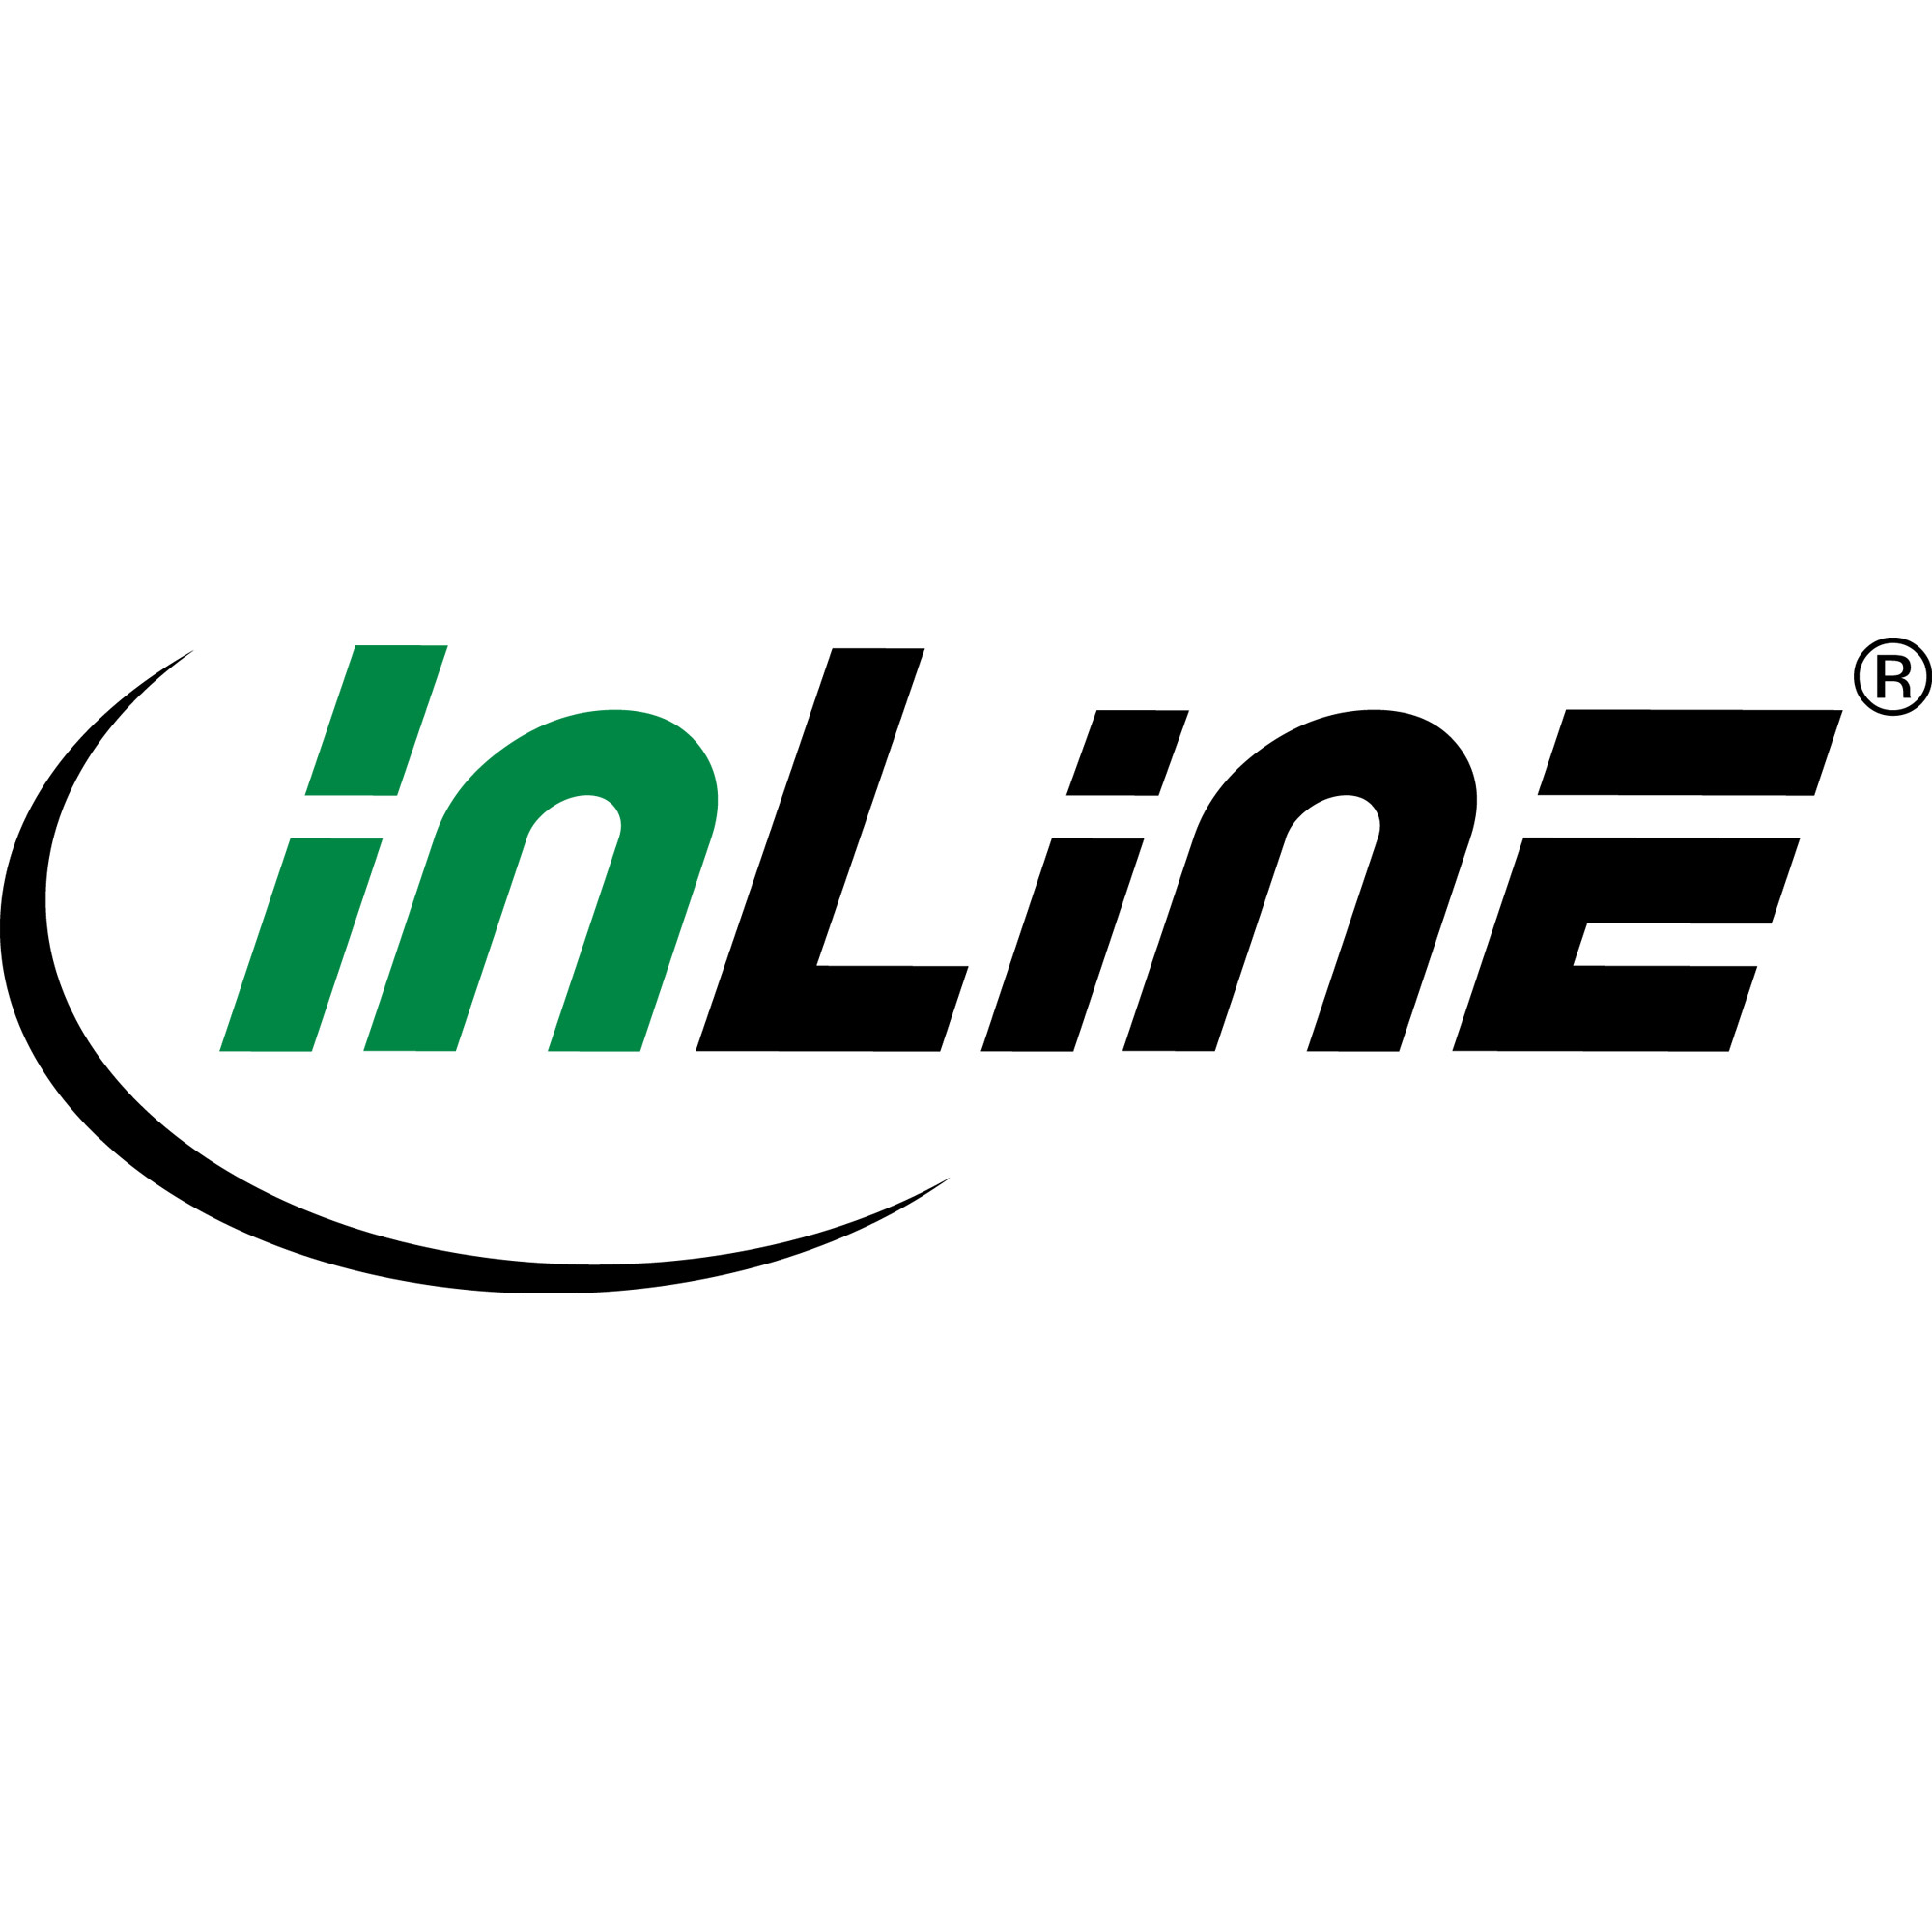 InLine - Patch-Kabel - 15,0m - Grau